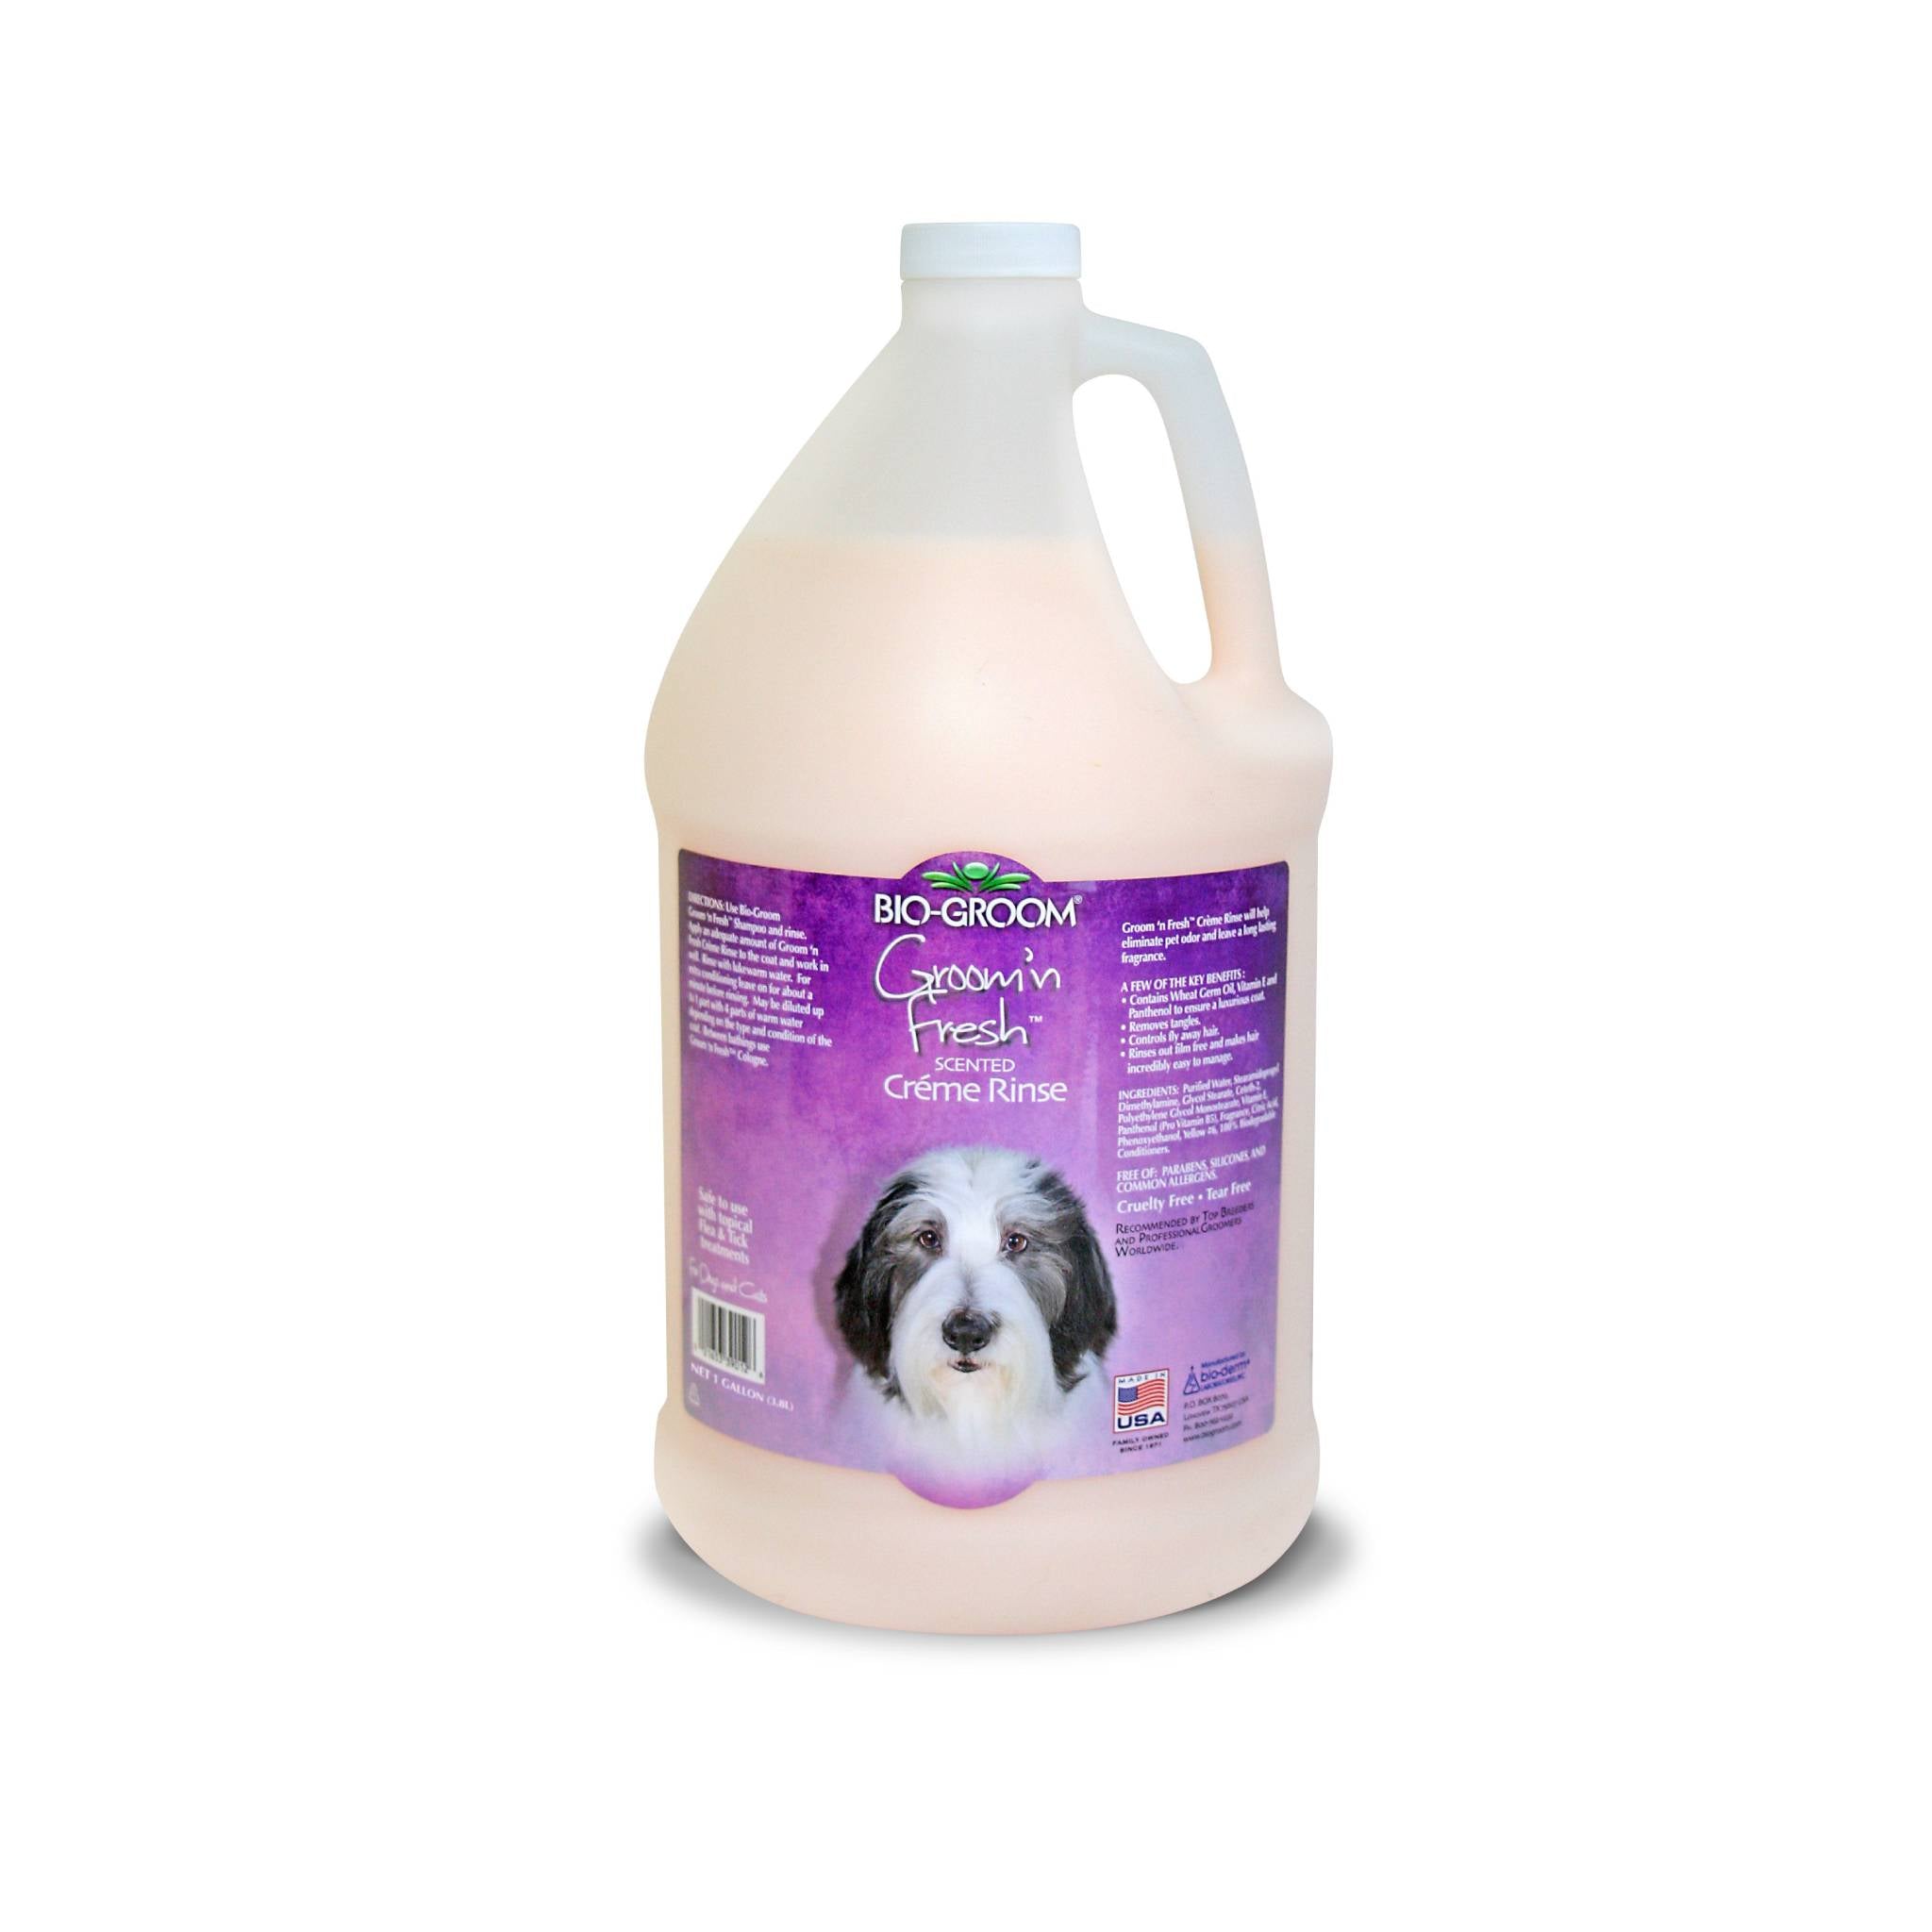 Bio-Groom Groom 'N Fresh Scented Creme Rinse Dog Conditioner